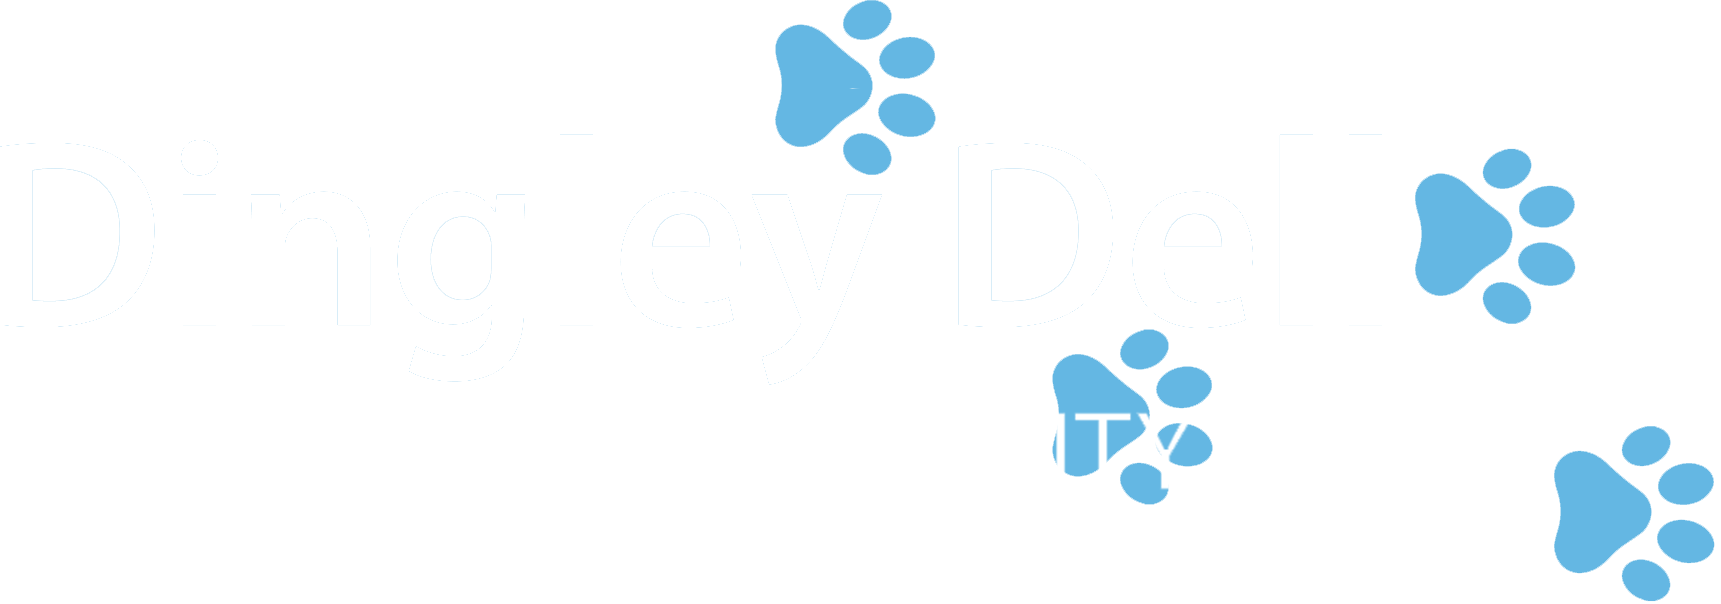 Dingley Dell Dog Training and Agility Club